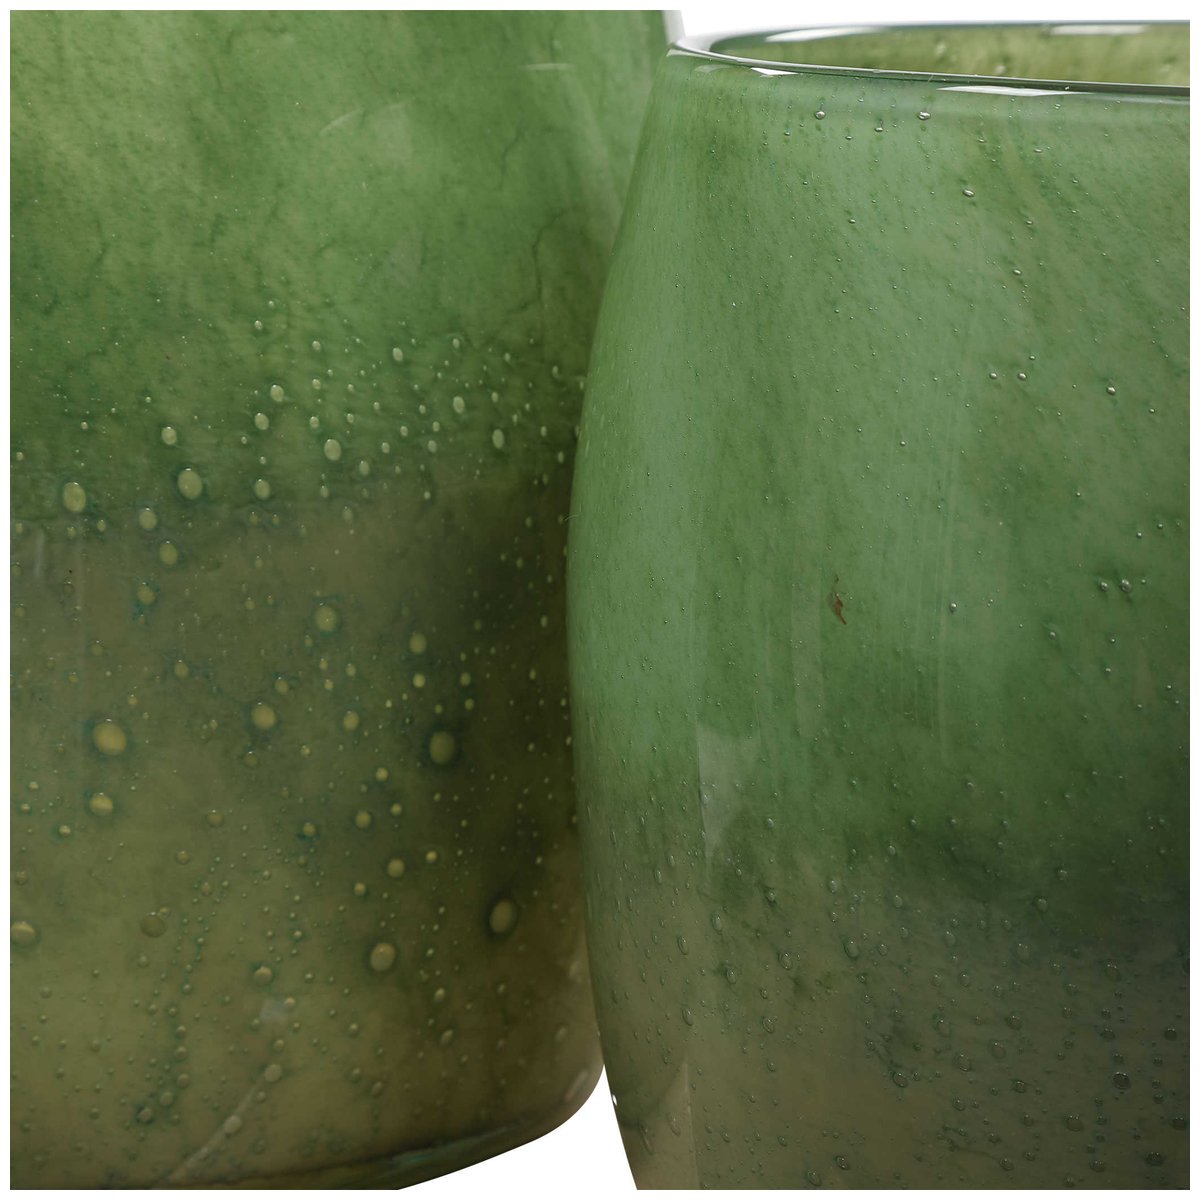 Uttermost Matcha Green Glass Vases, 2-Piece Set